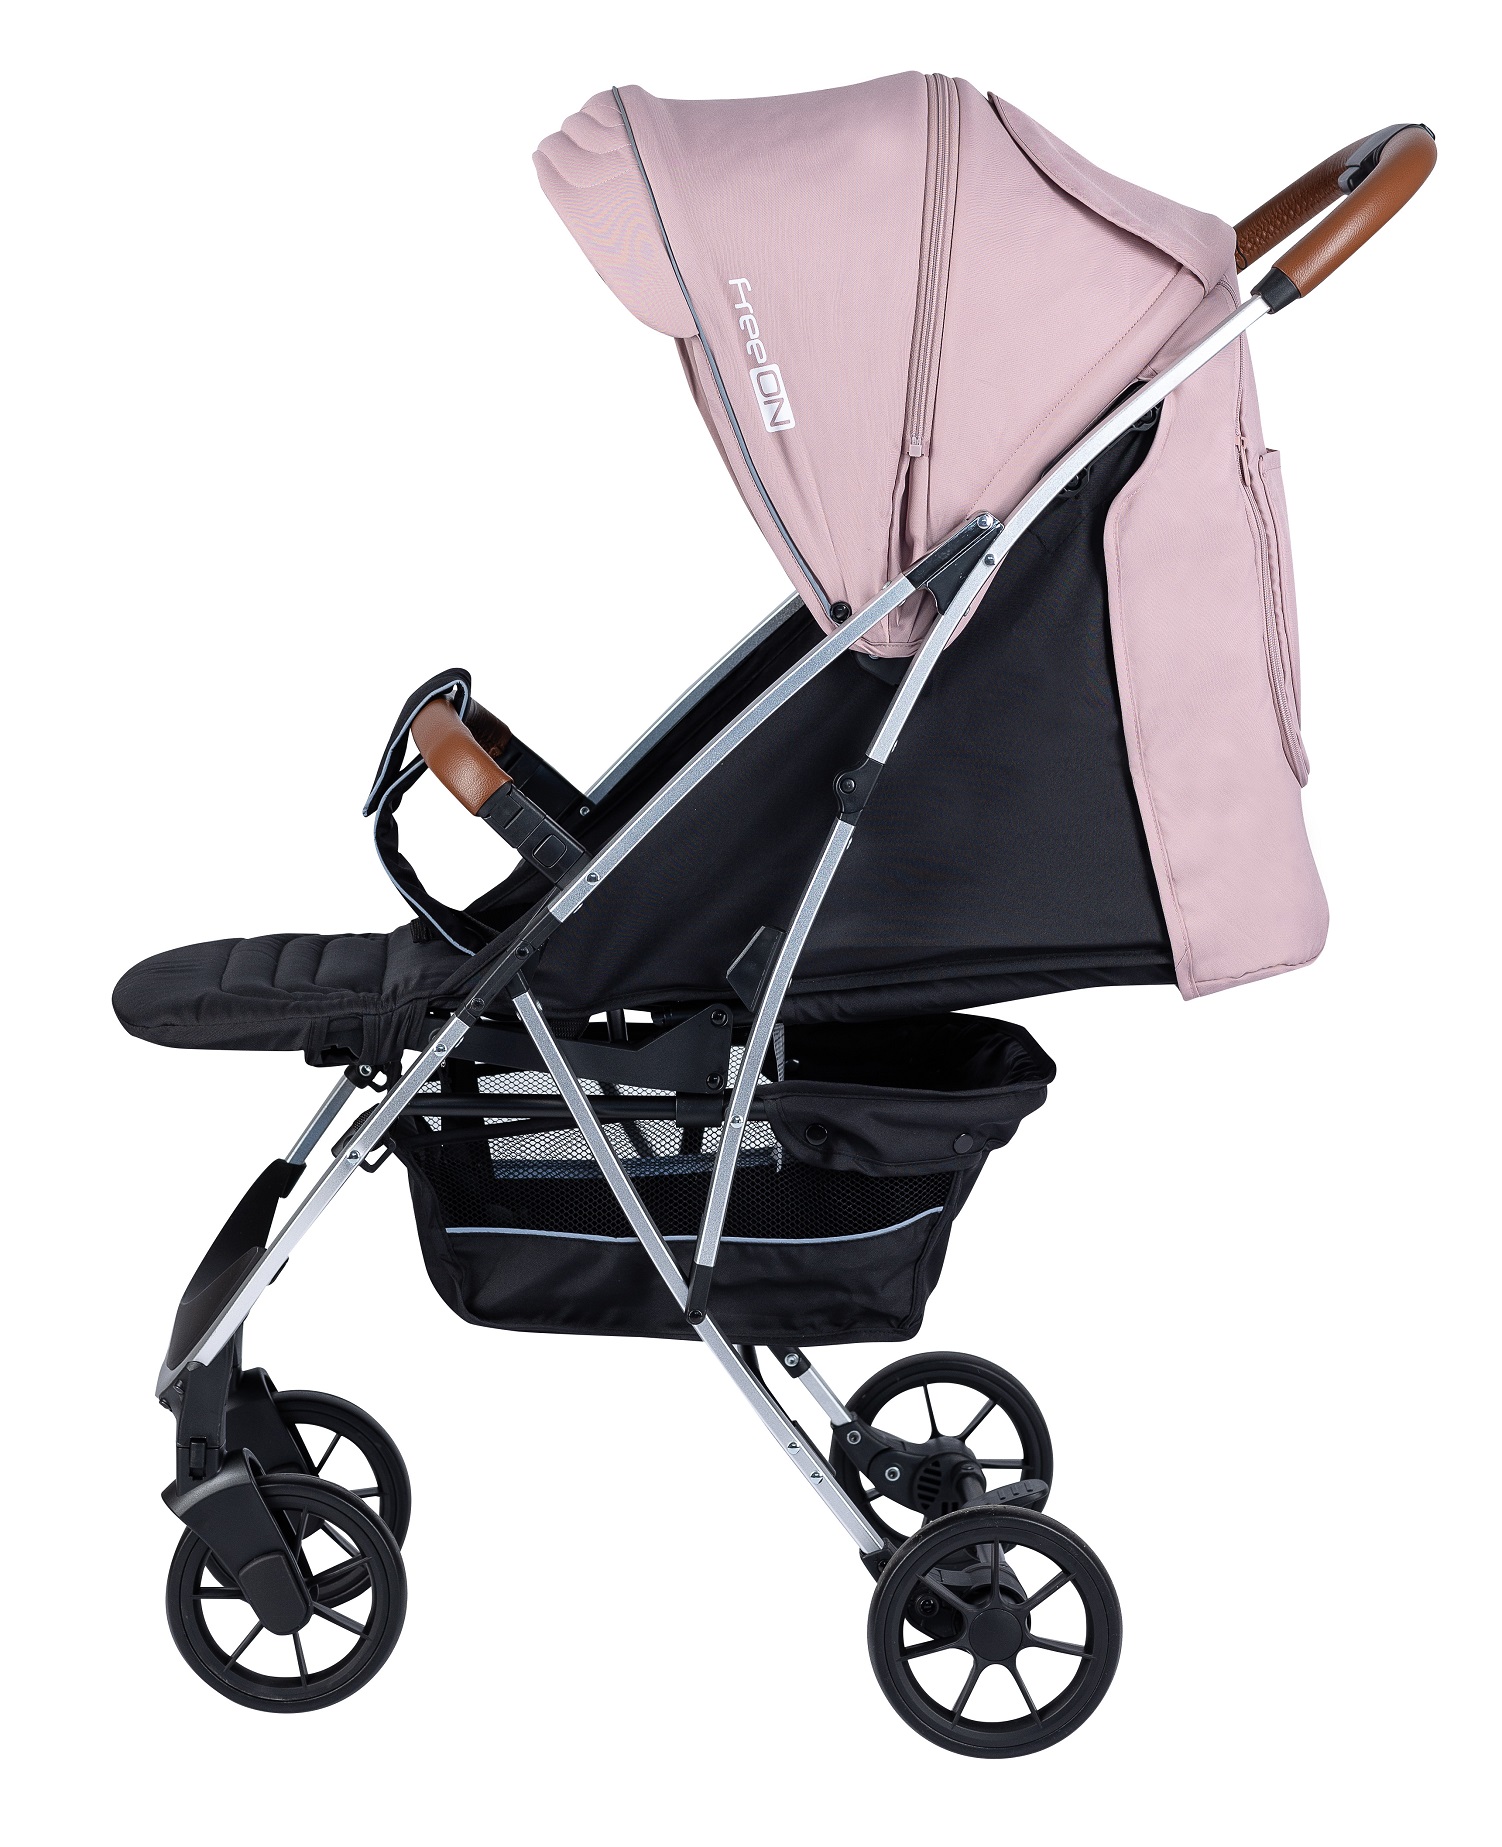 Прогулочная коляска для ребенка FreeON LUX Premium Dusty Pink-Black - фото 2